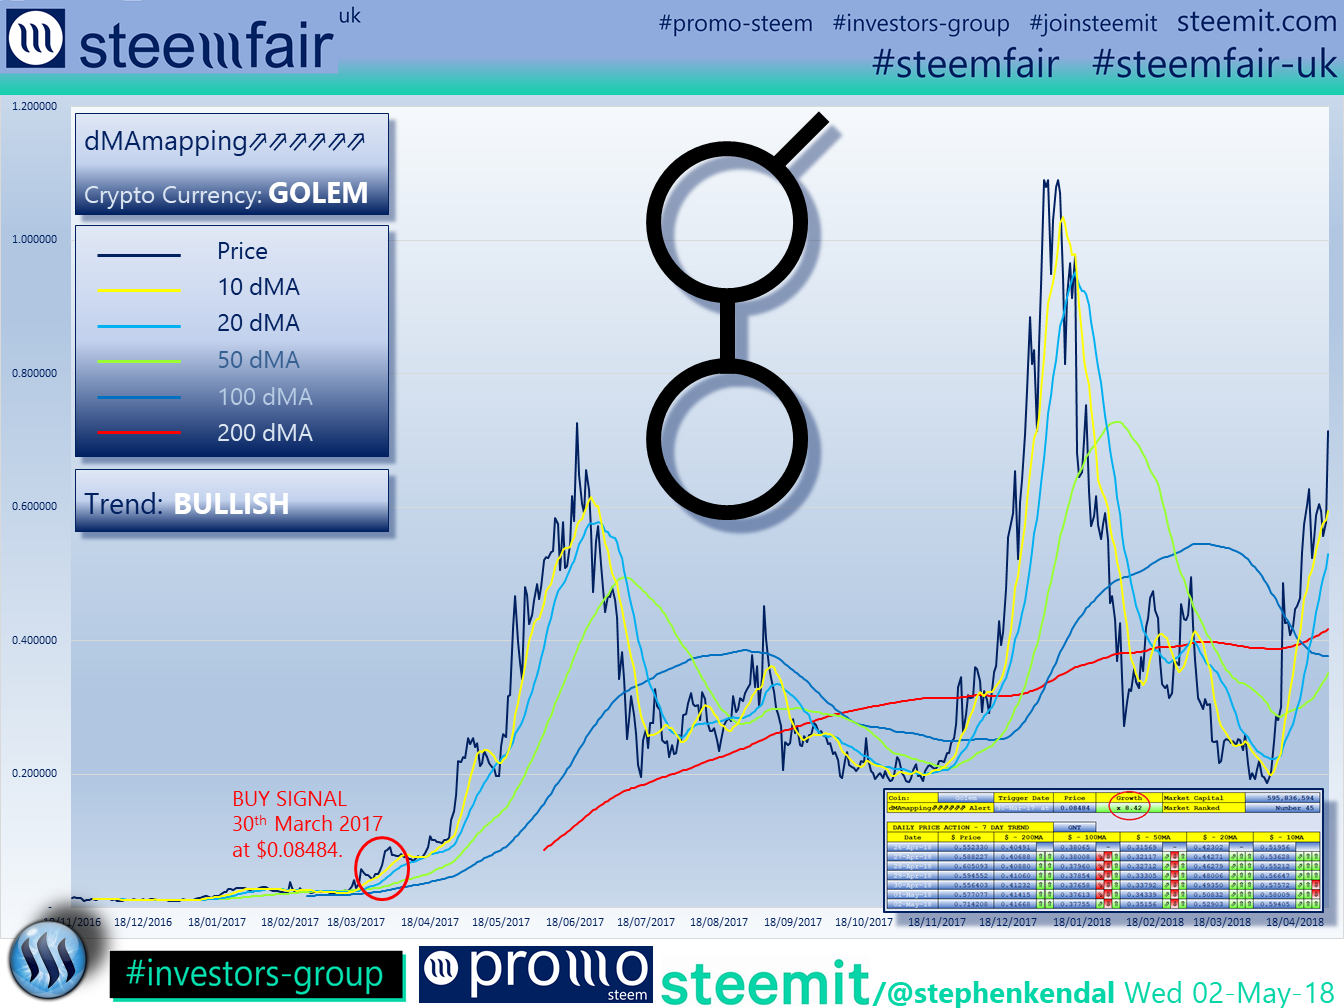 SteemFair SteemFair-uk Promo-Steem Investors-Group Golem